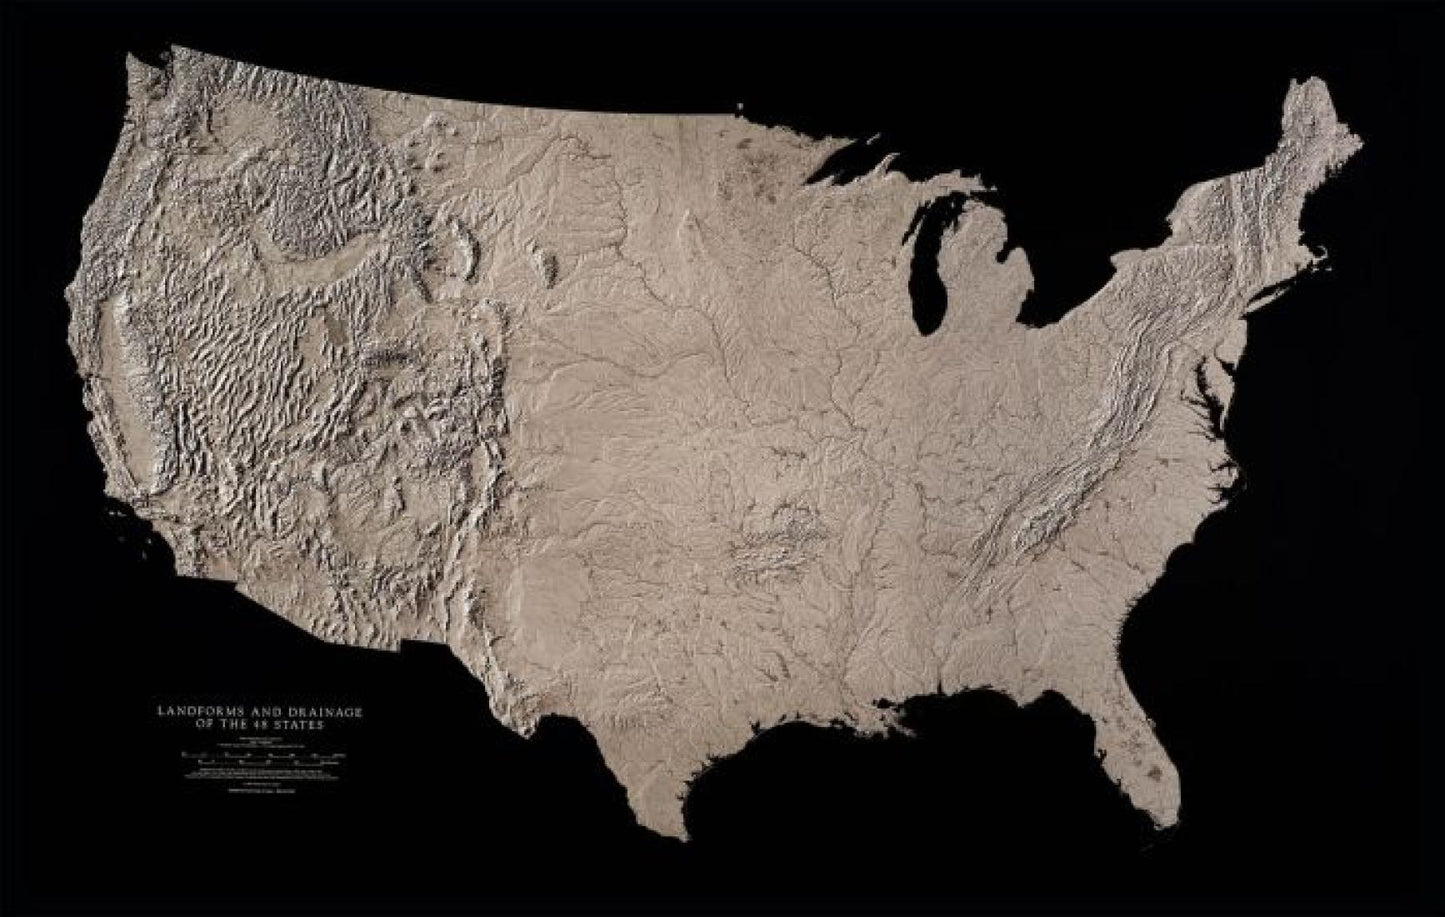 Landforms & drainage of the 48 states [black & white, 37x58]